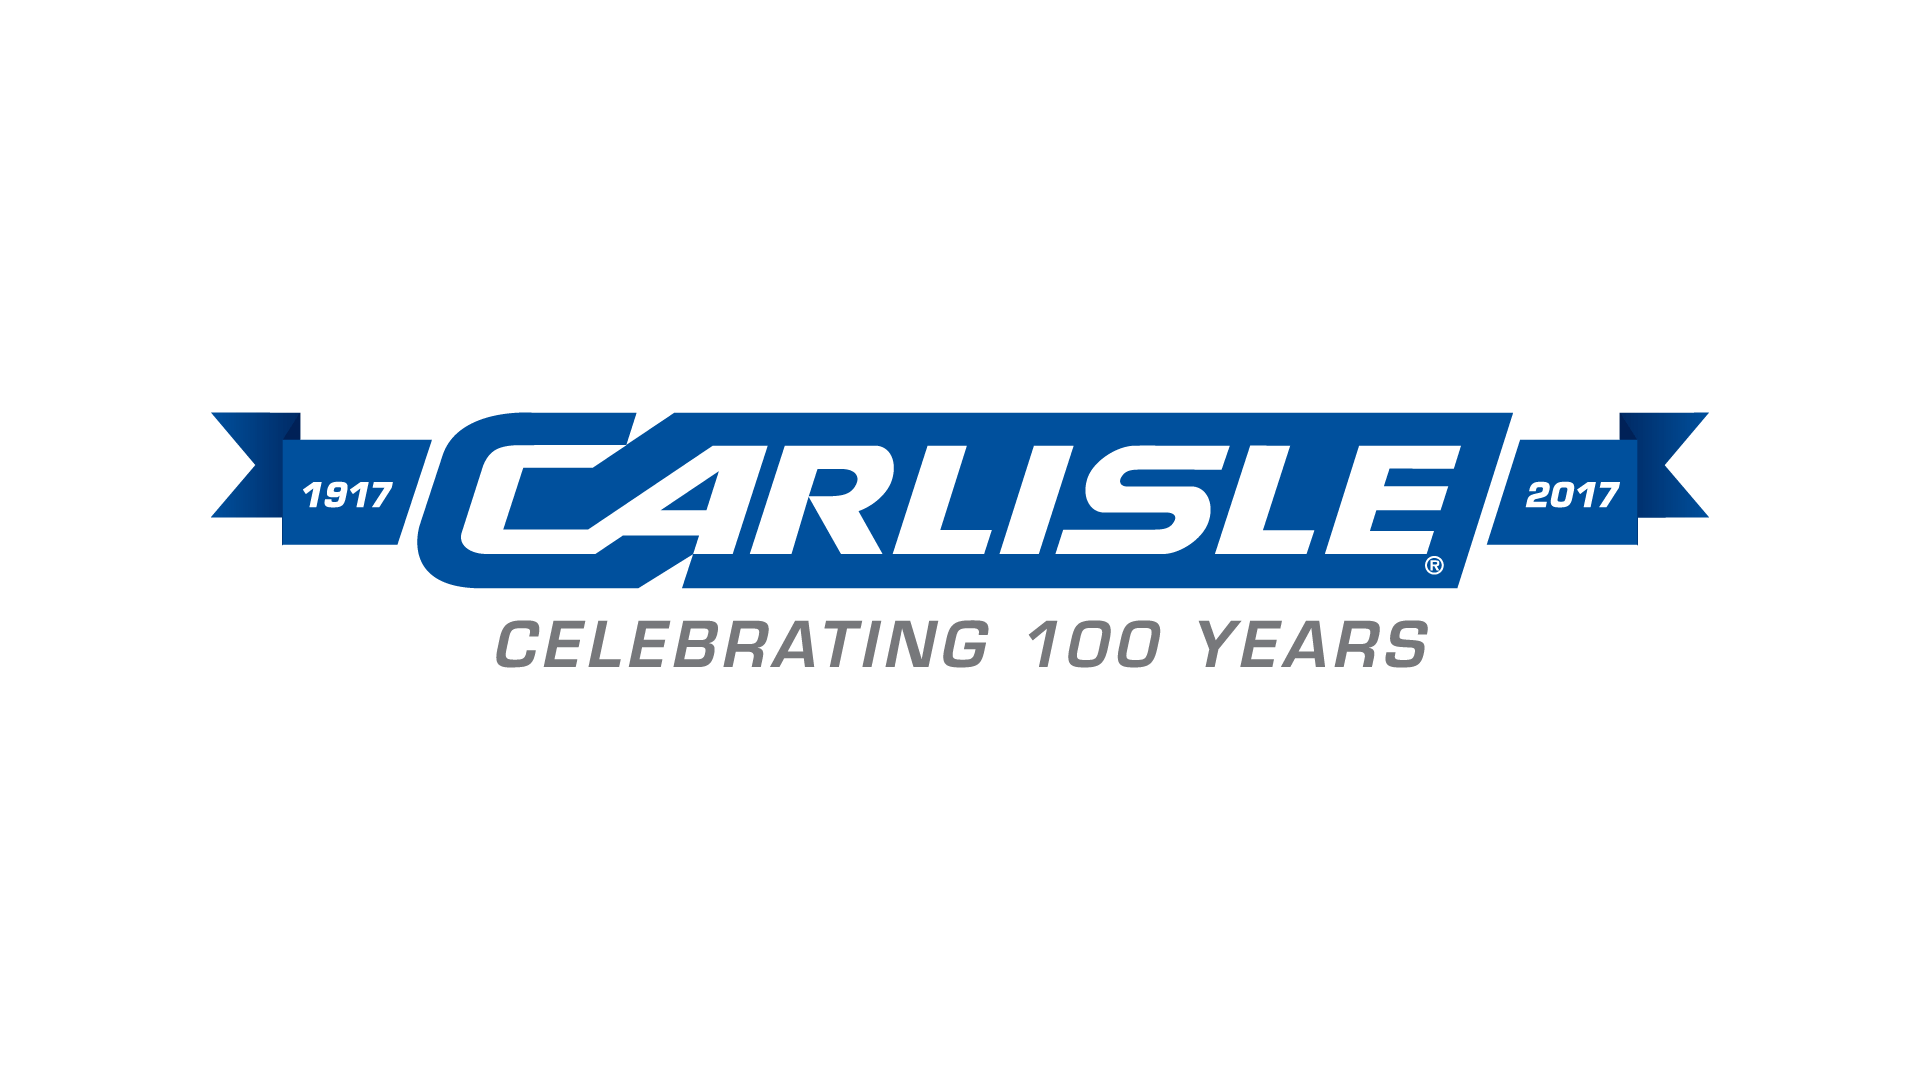 Carlisle Logo - Carlisle Companies Inc. (NYSE: CSL) Celebrates their 100th ...